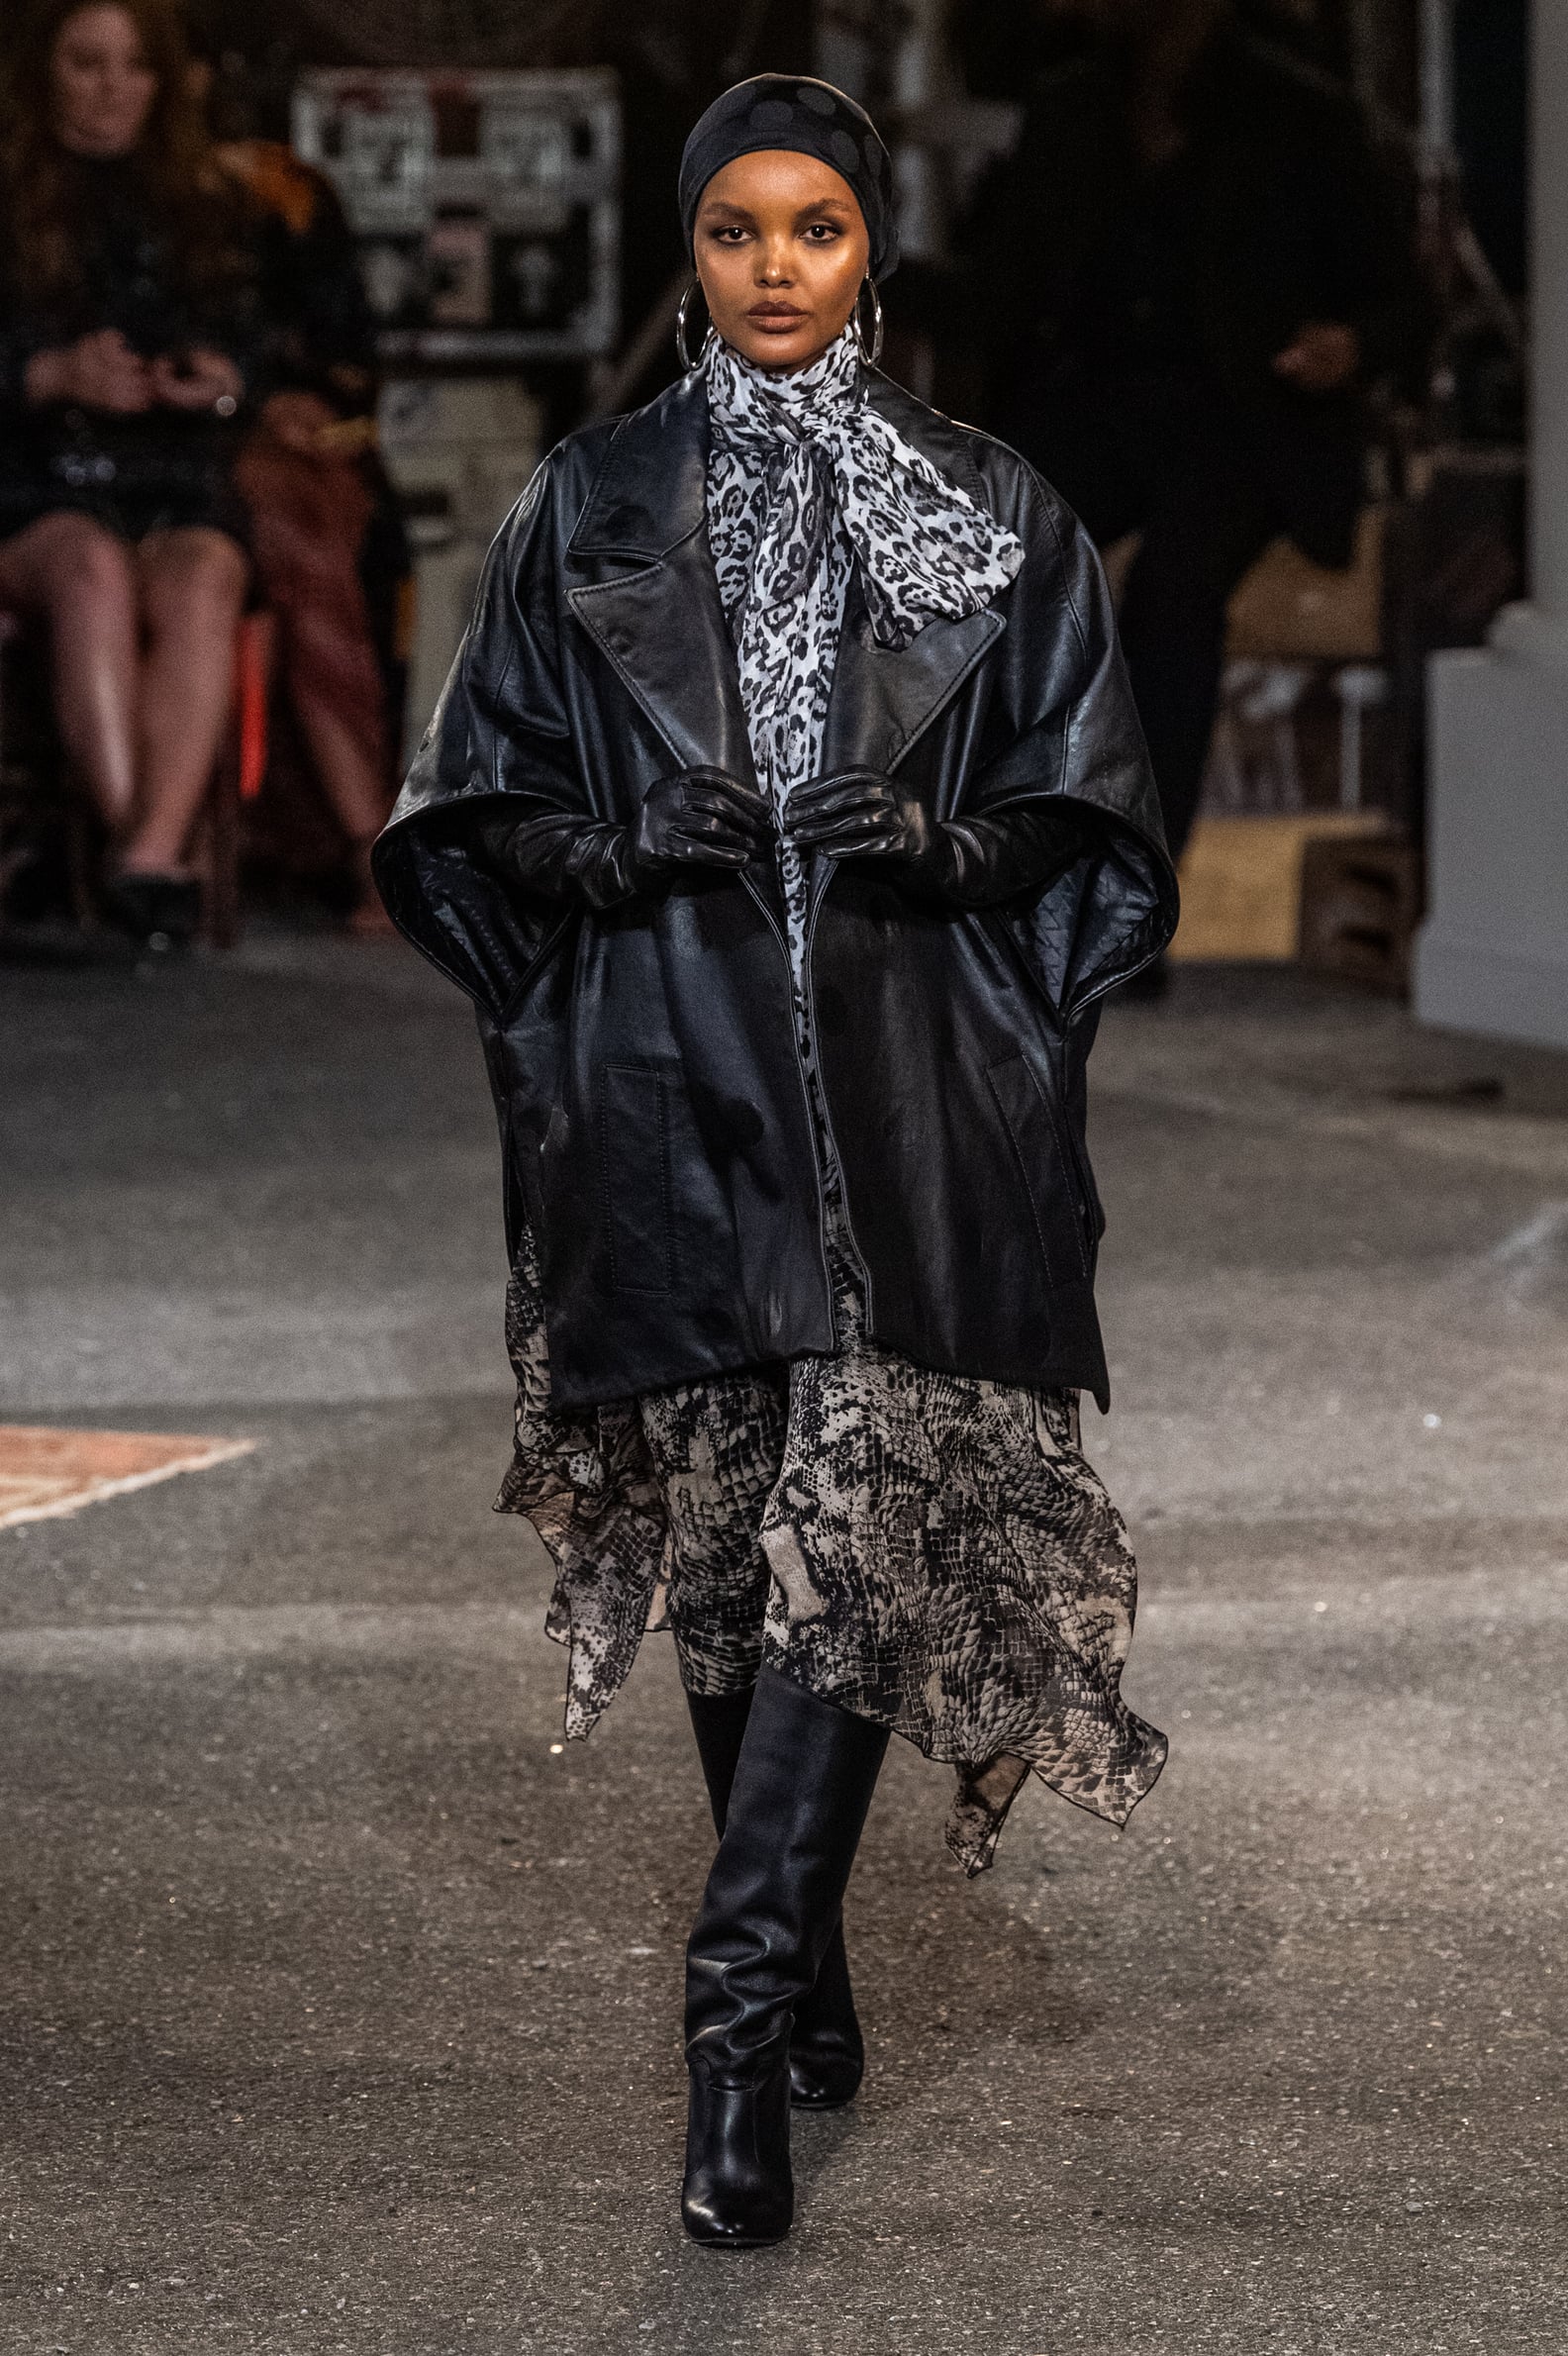 Zendaya x Tommy Hilfiger New York Fashion Week Show 2019 | POPSUGAR Fashion